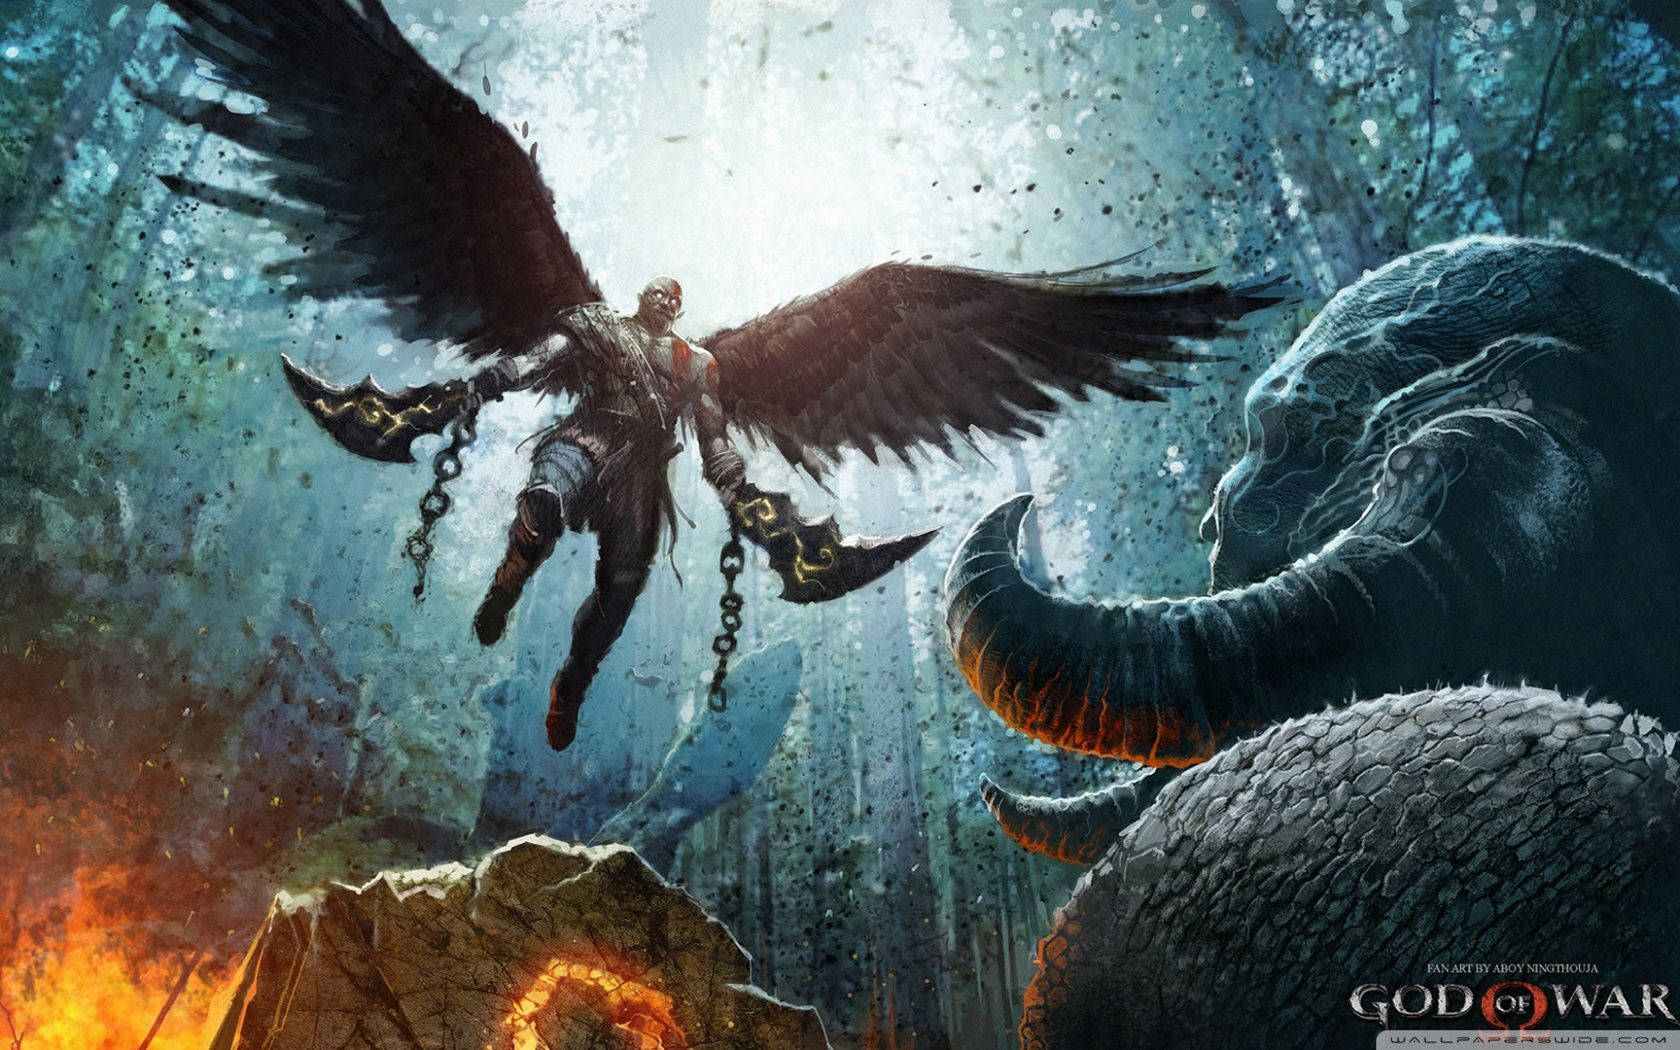 Kratos Icarus Wings God of War PS4 desktop wallpaper cover.